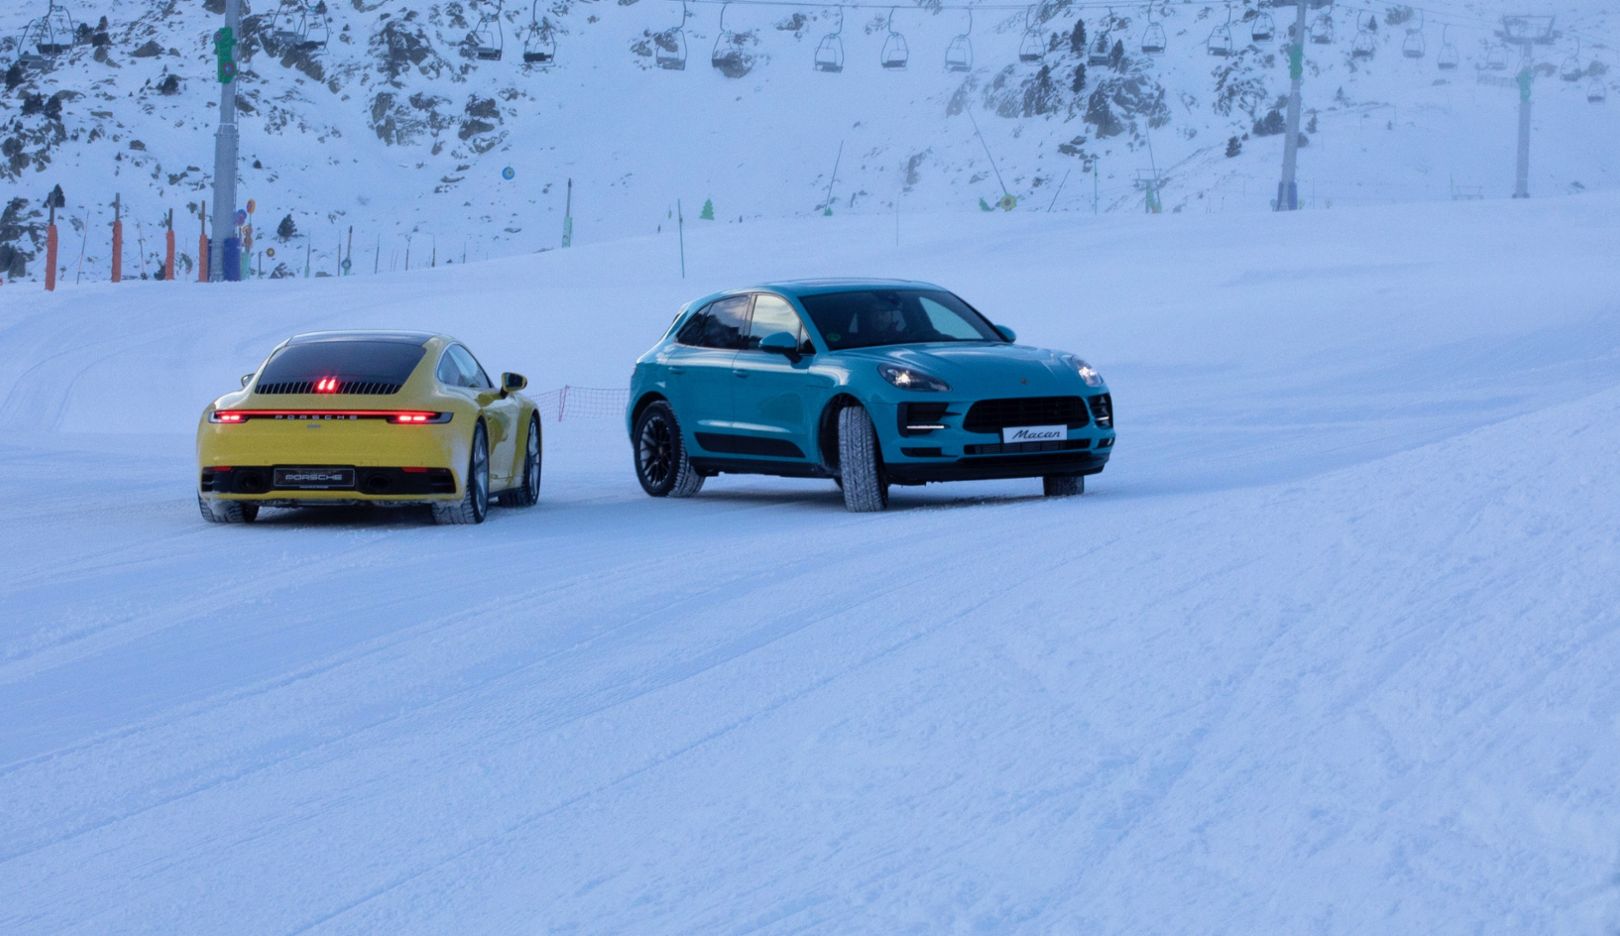 A ski day with Porsche